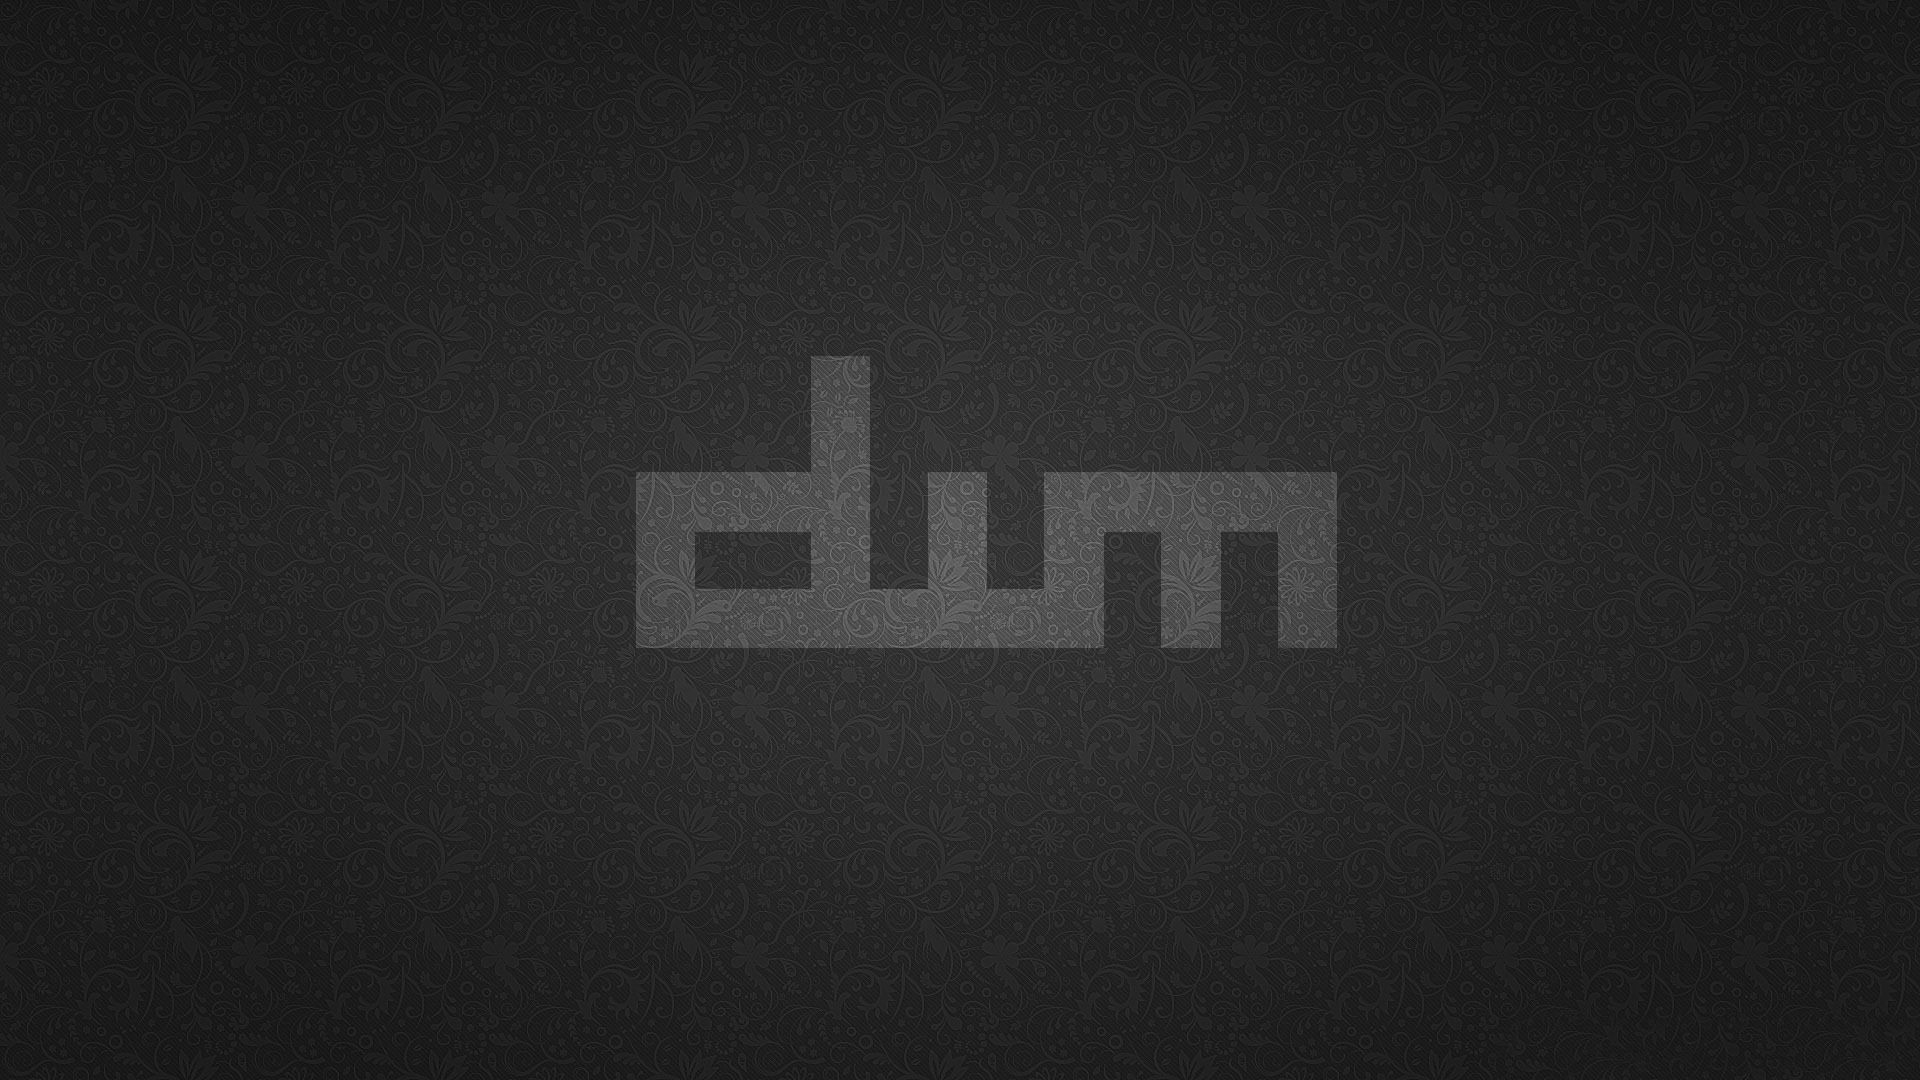 dwm Linux wallpaper - Free Wide HD Wallpaper